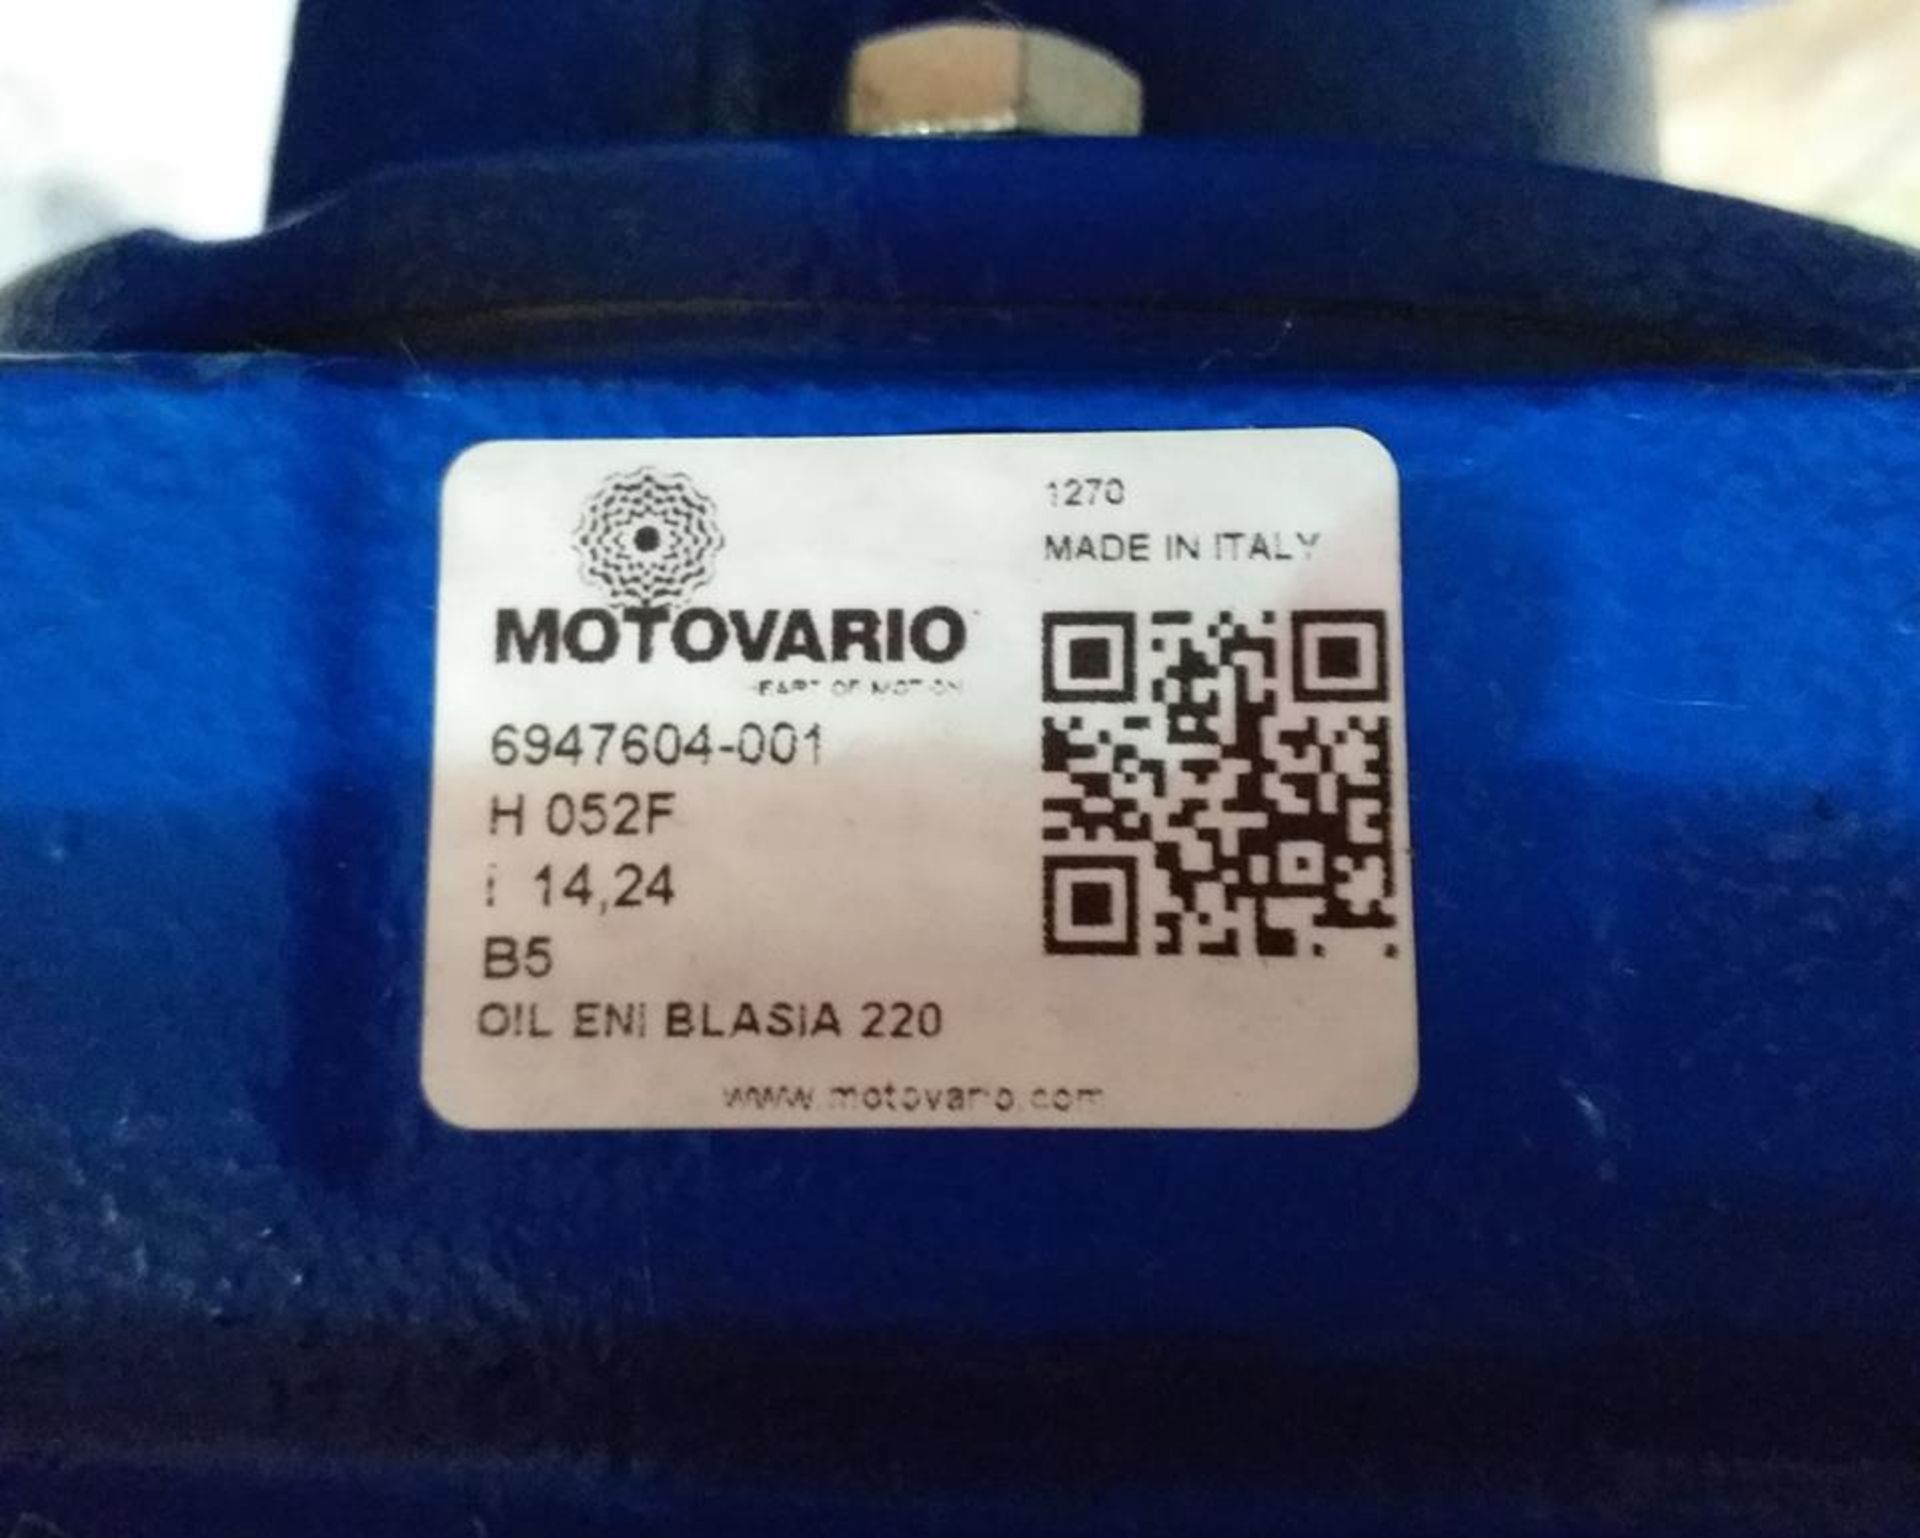 Motovario HF052 PAM28/250 14 2:1 REF:GG Gearbox - Image 3 of 3